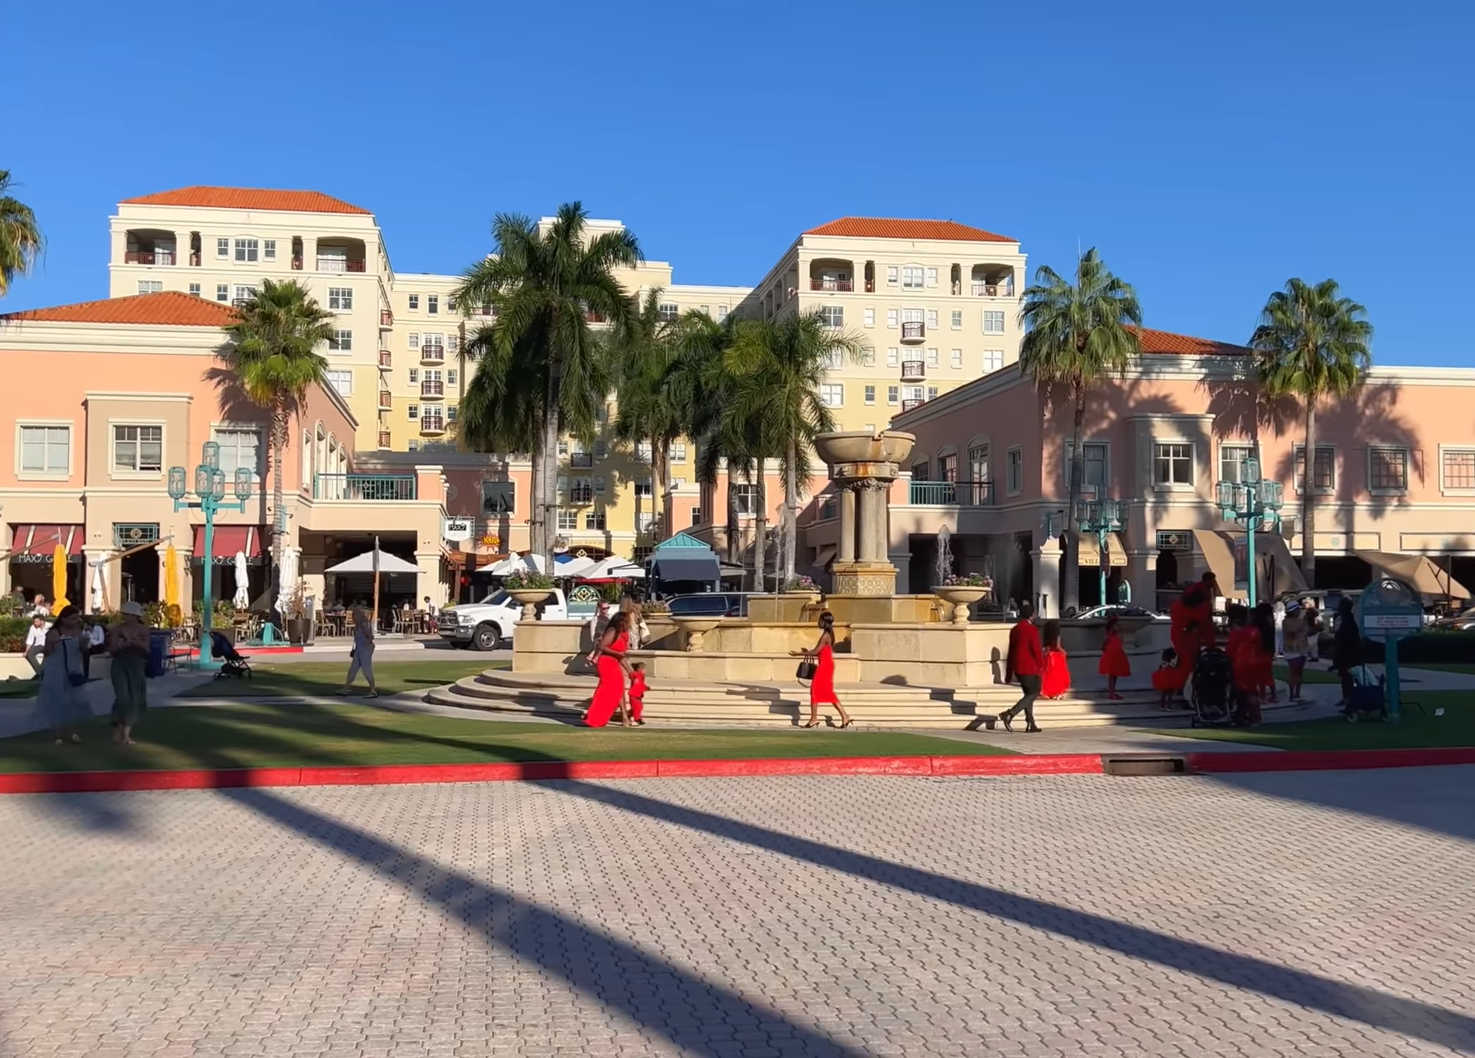 Plaza in Boca Raton, Florida